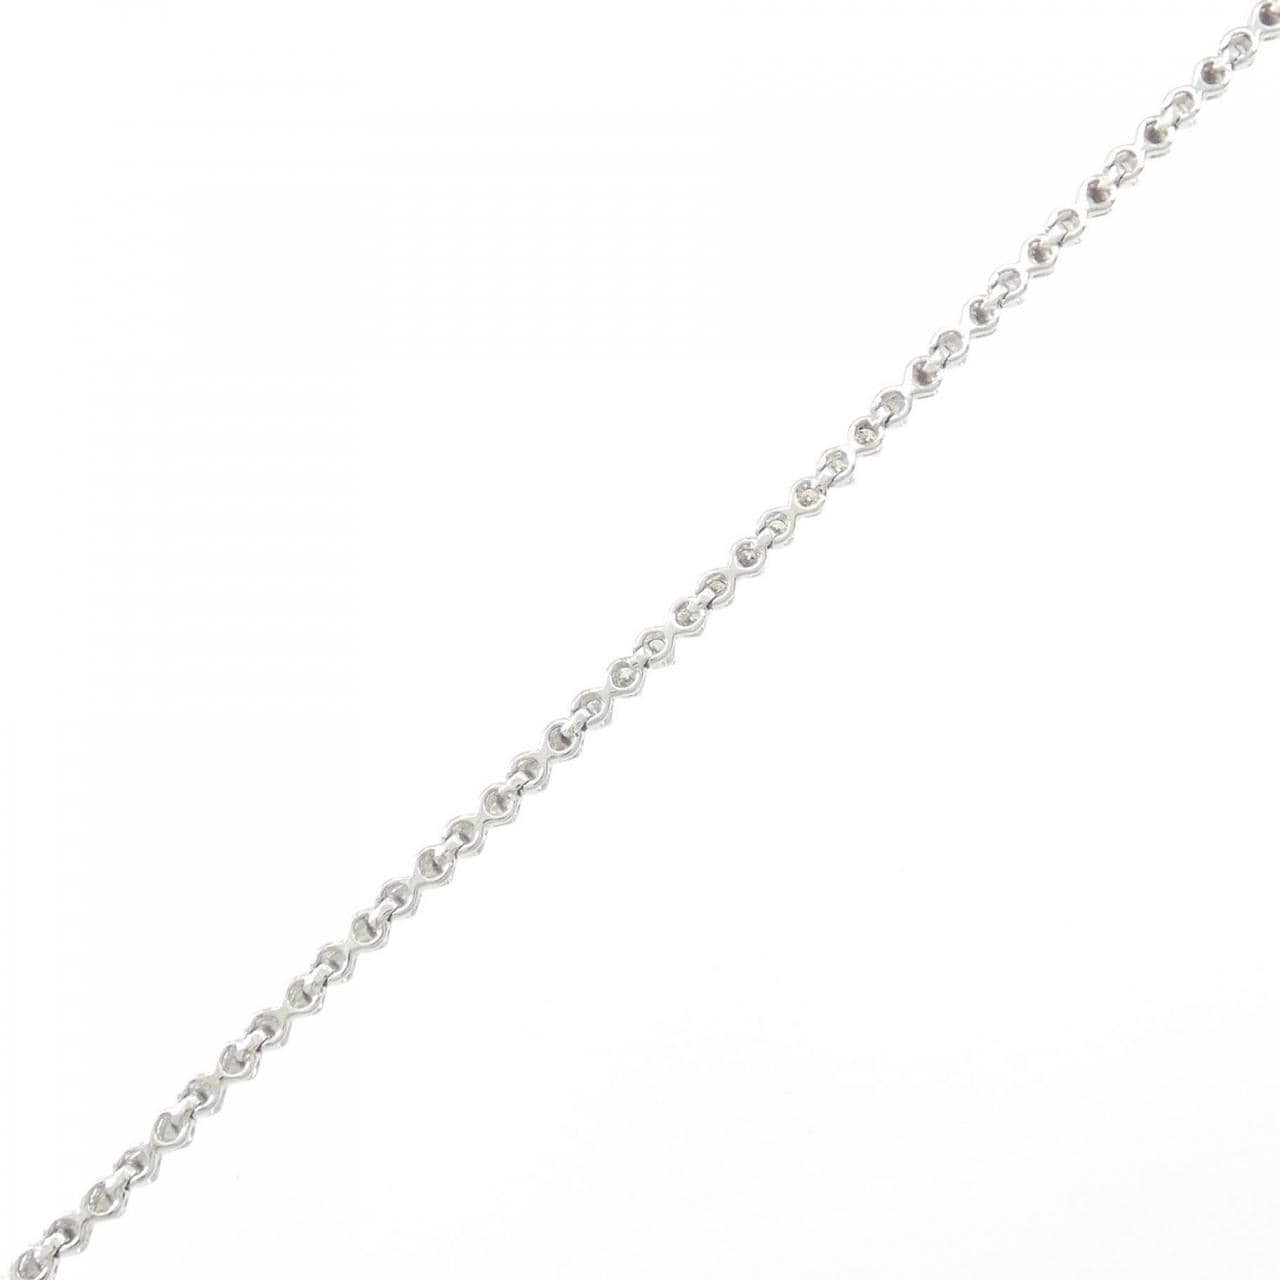 K18WG Diamond bracelet 0.10CT